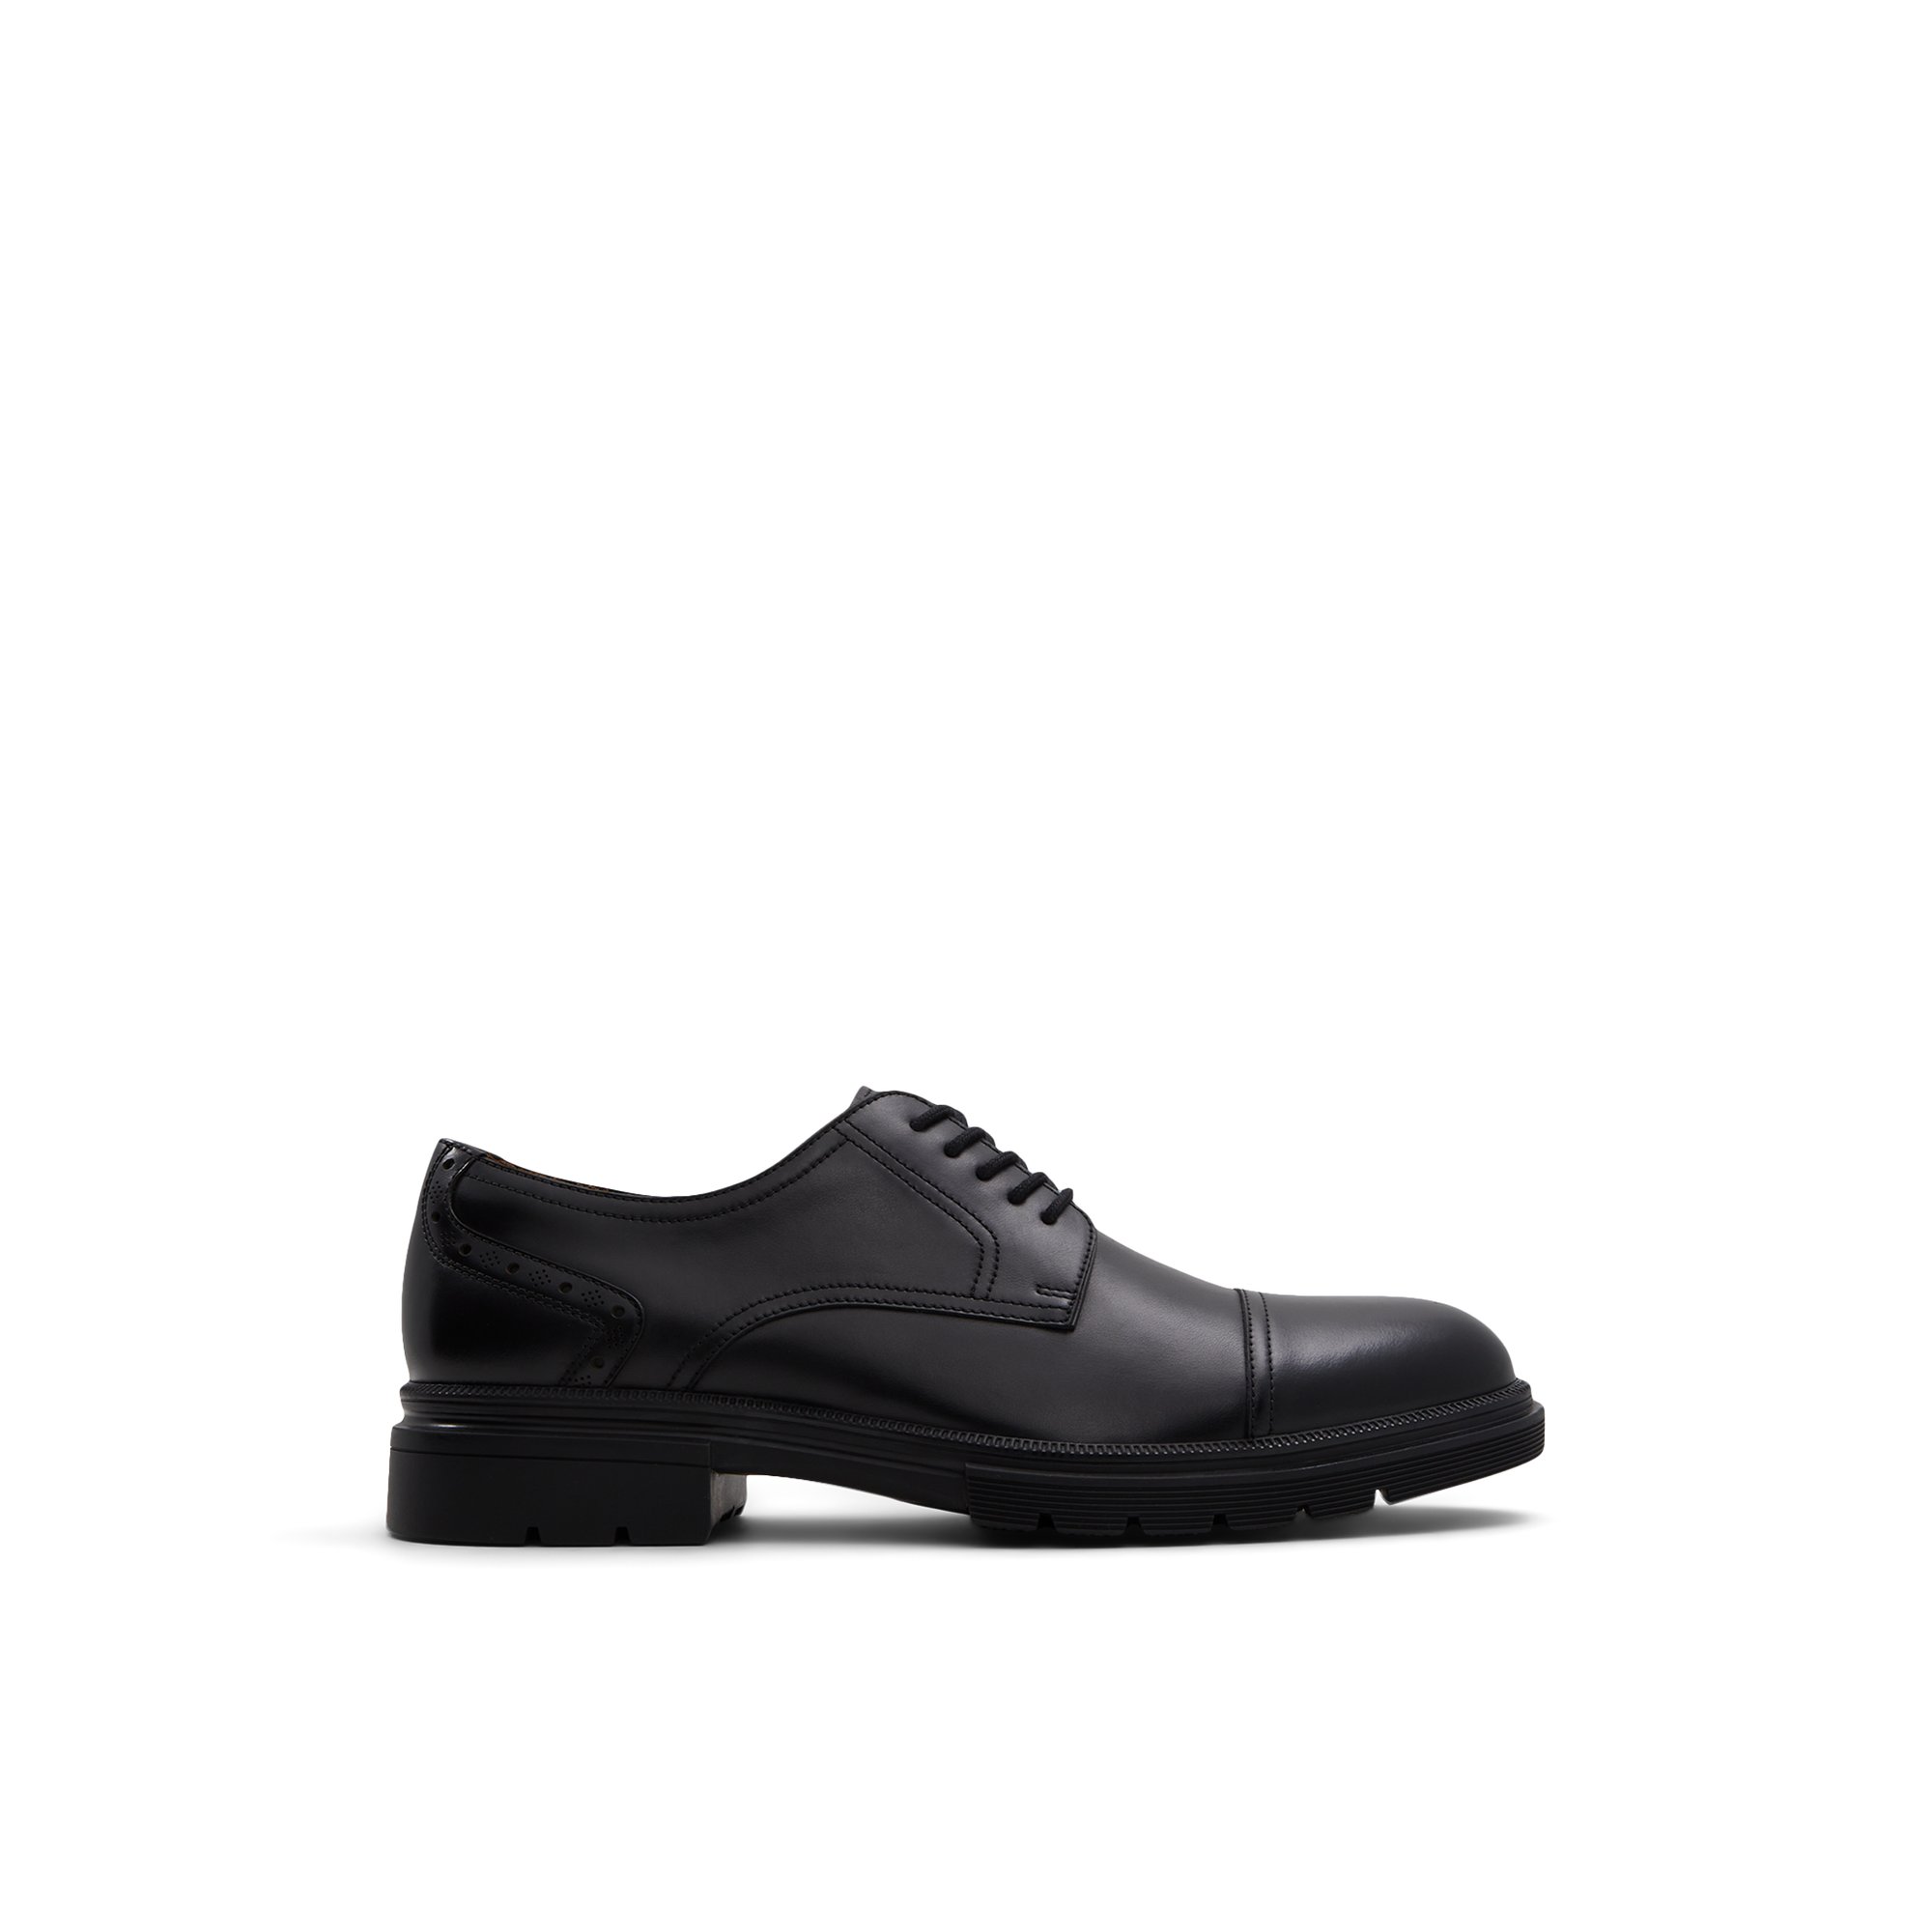 ALDO Geller - Men's Dress Shoes - Black